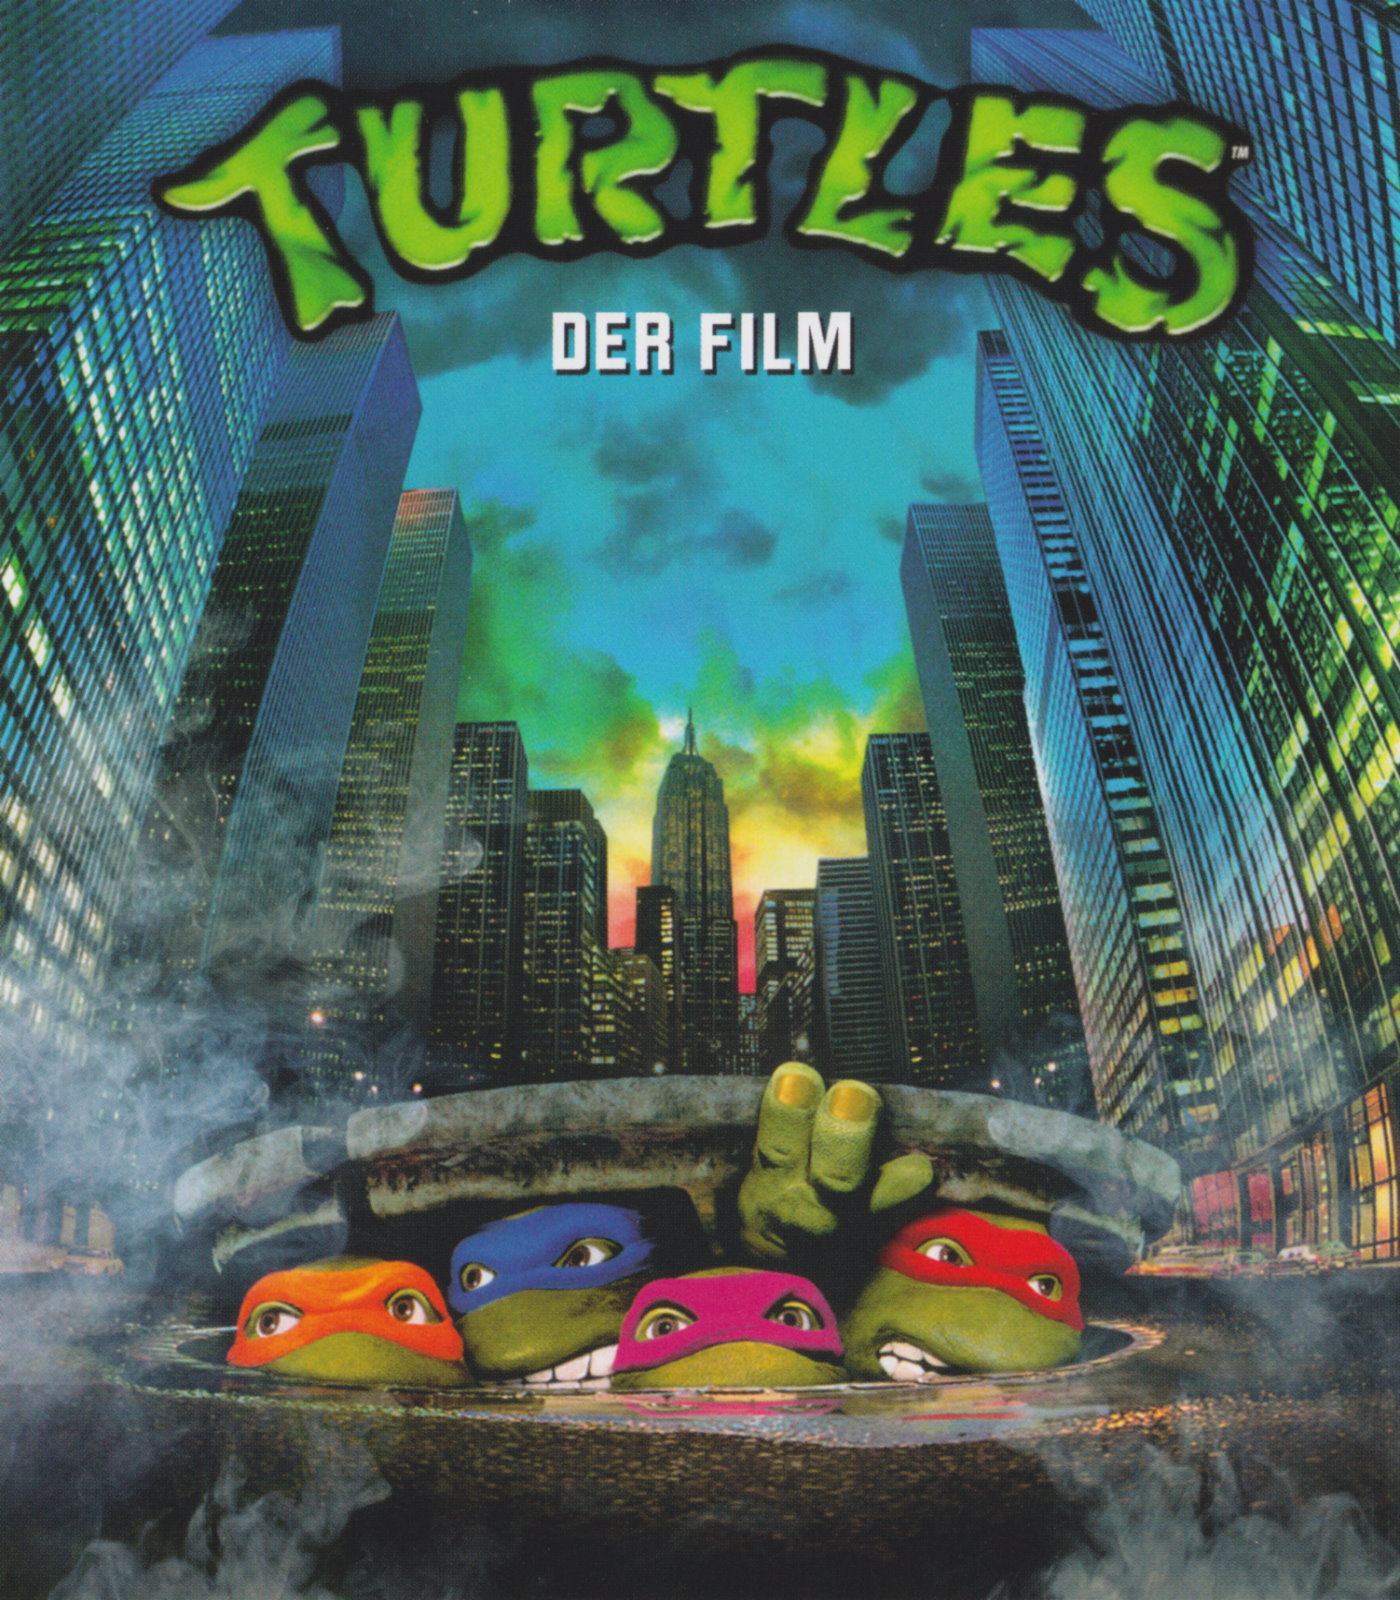 Cover - Turtles - Der Film.jpg